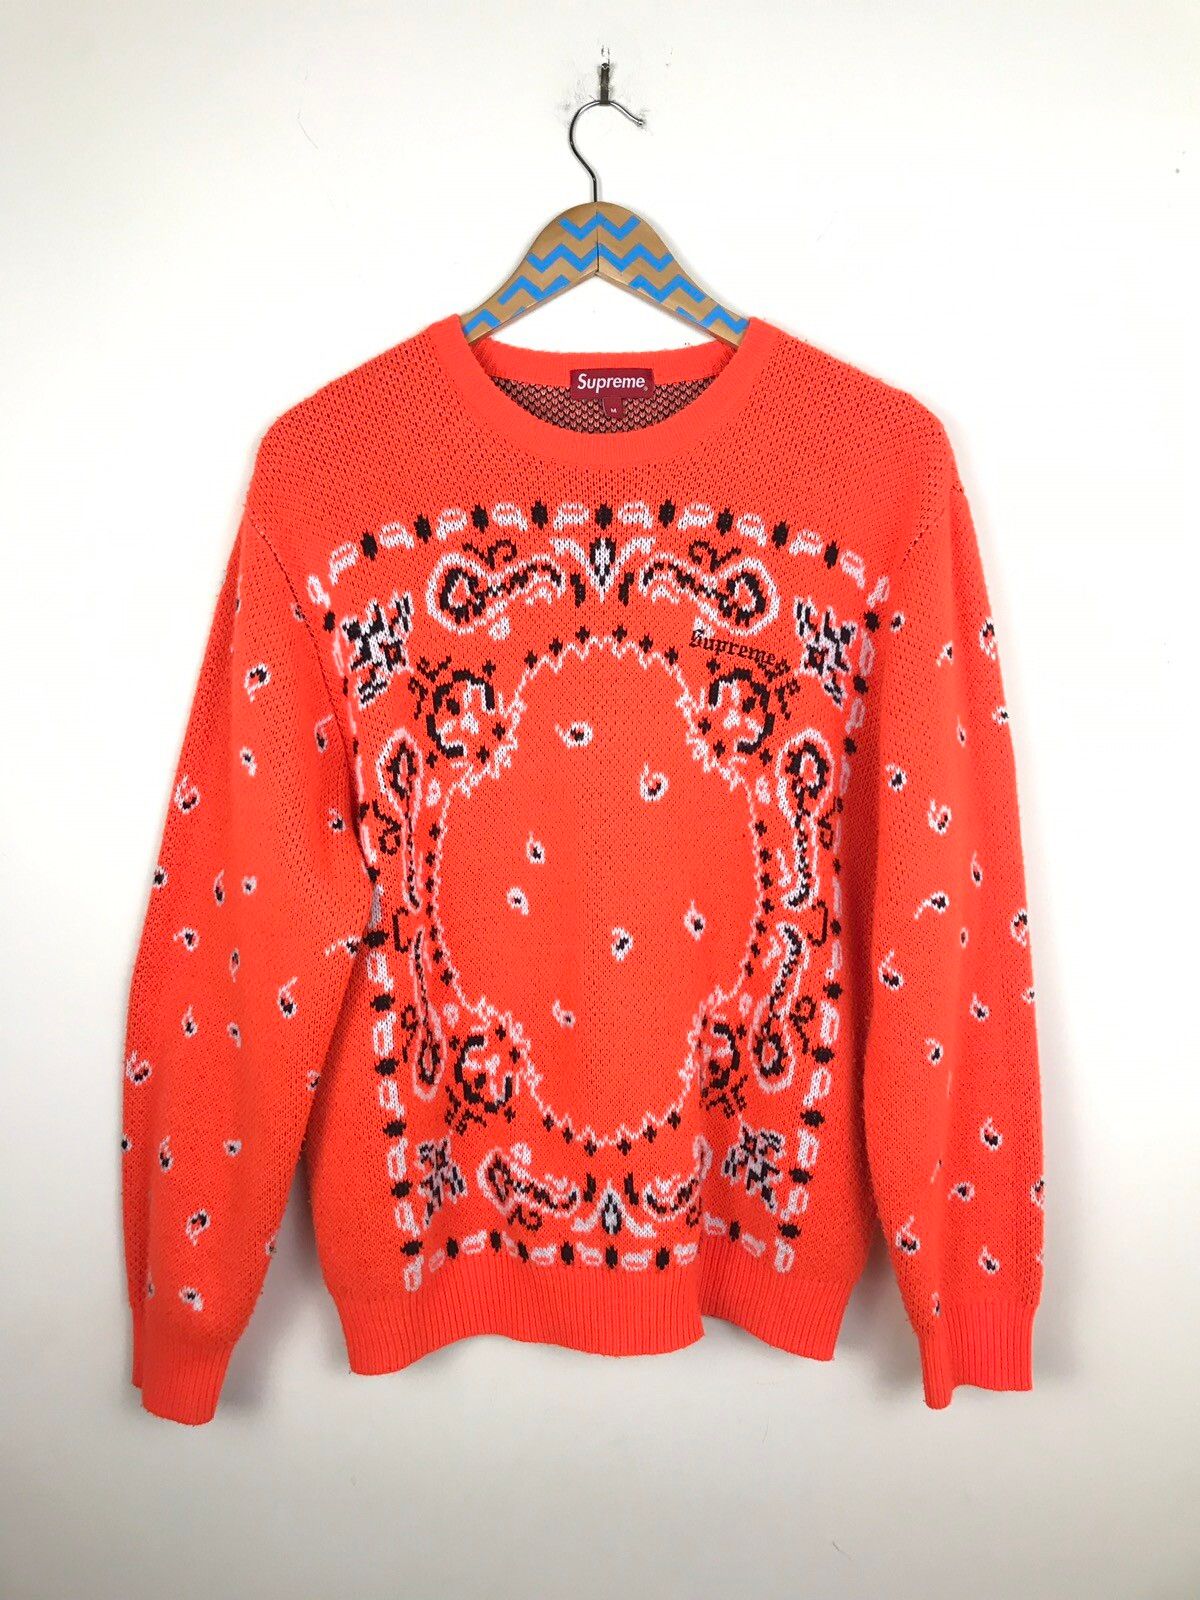 Supreme Bandana Sweater | Grailed